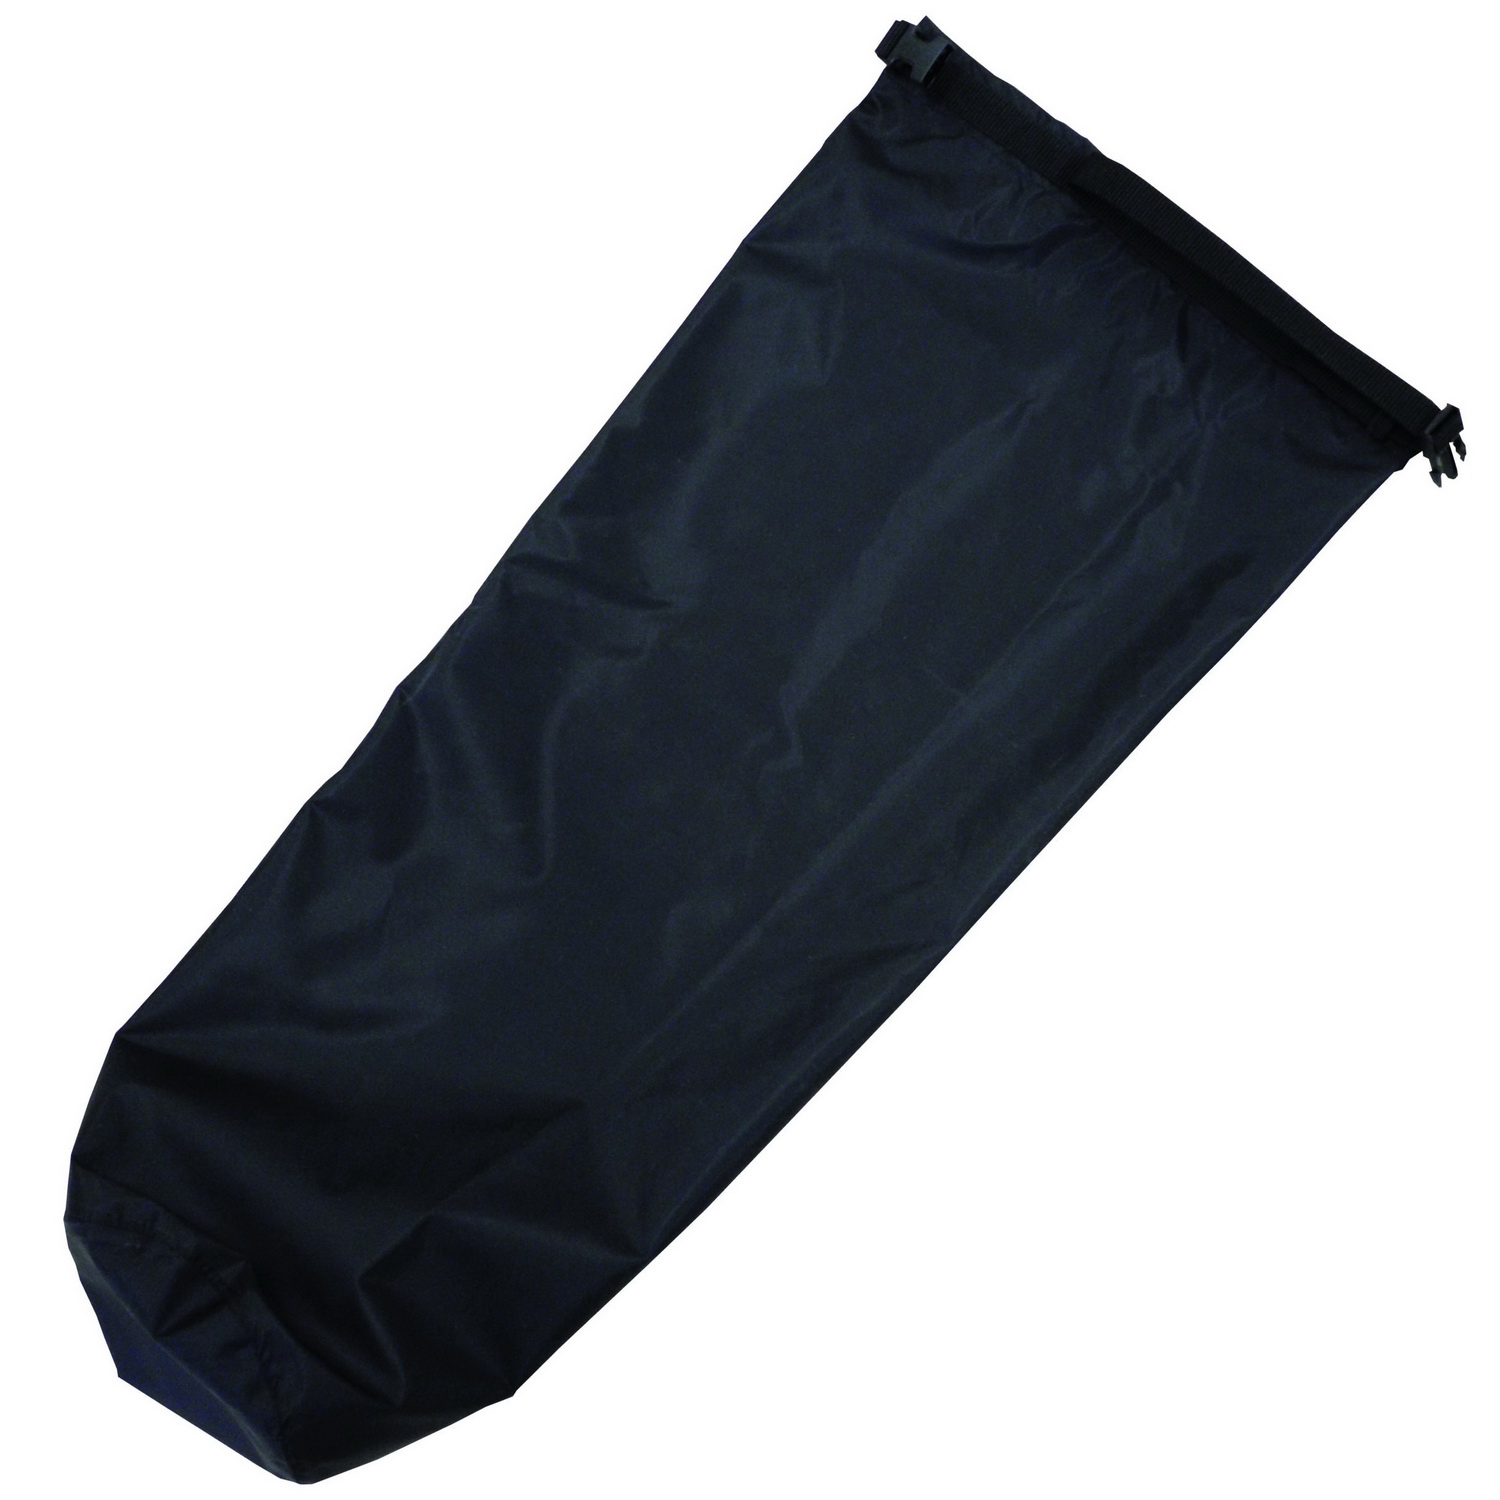 Jurek Dry bag - size M (Ø17x55 cm)